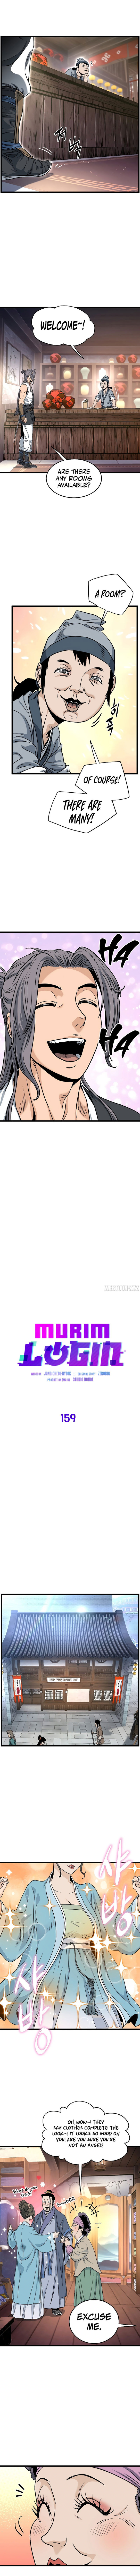 murim-login-chap-159-8